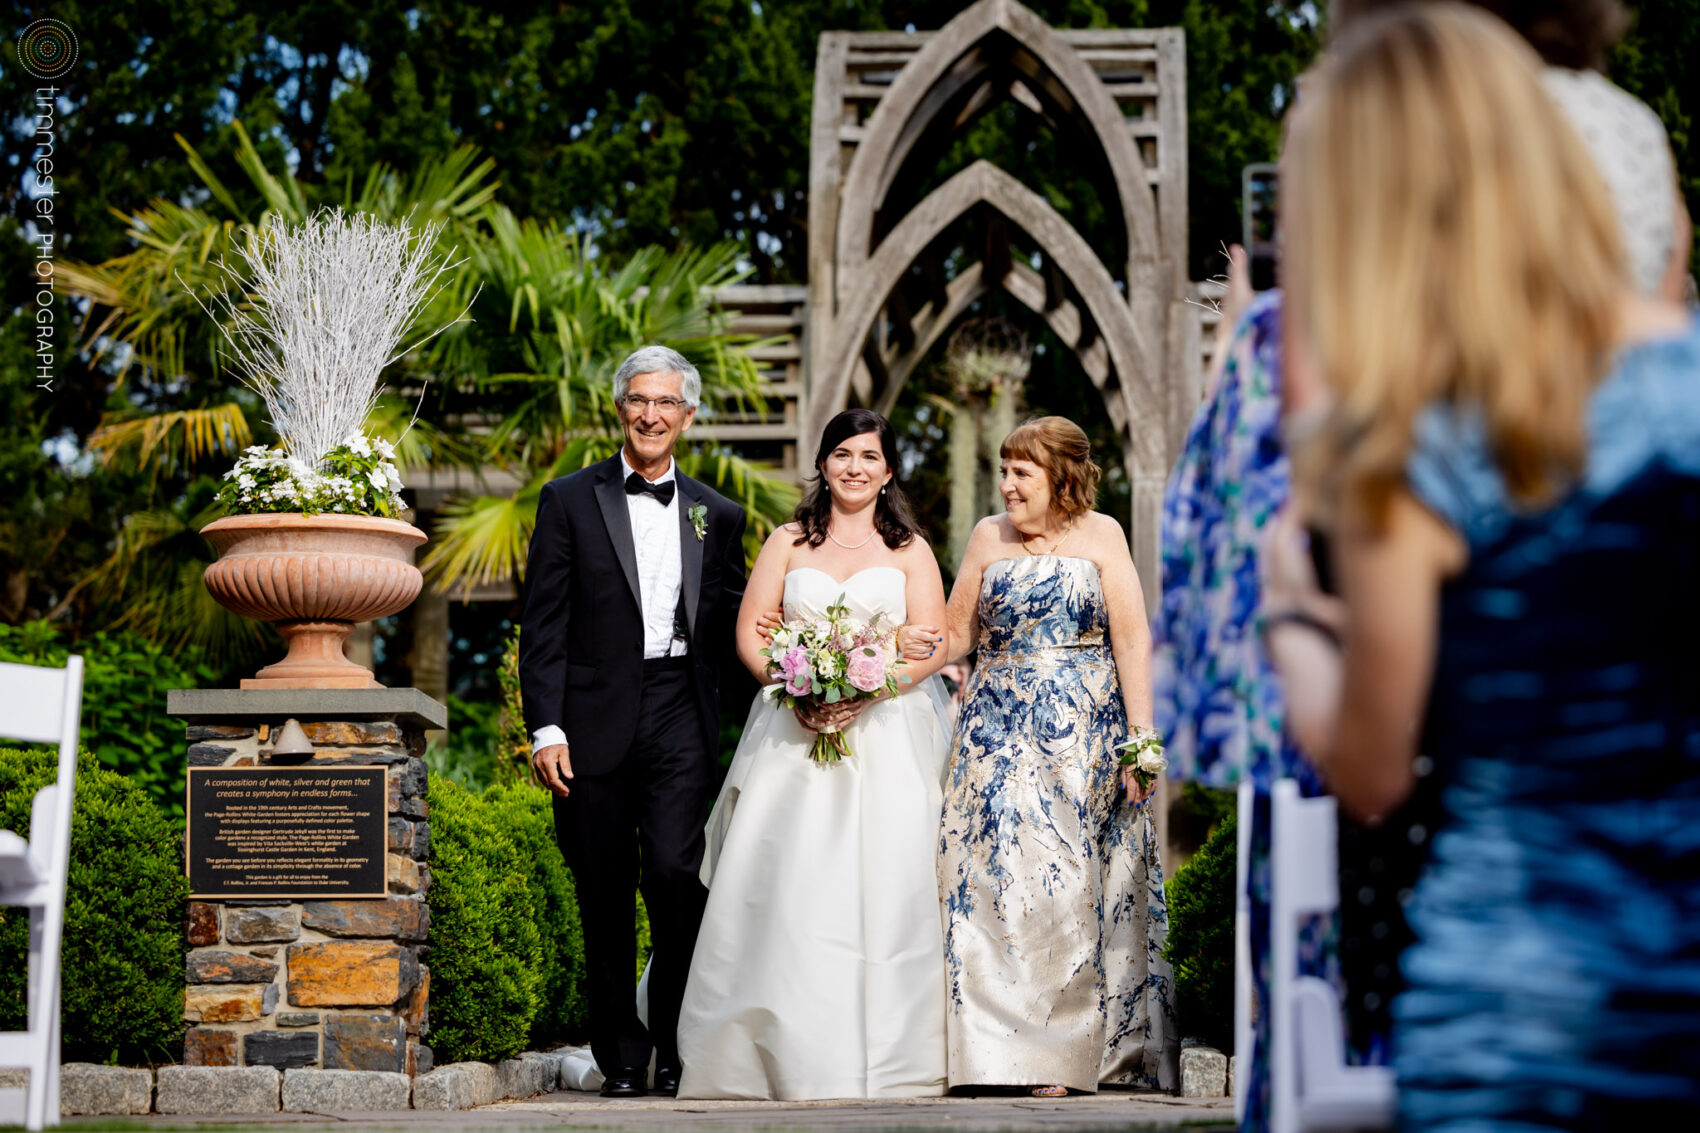 Wedding ceremony and reception at Duke Gardens in North Carolina